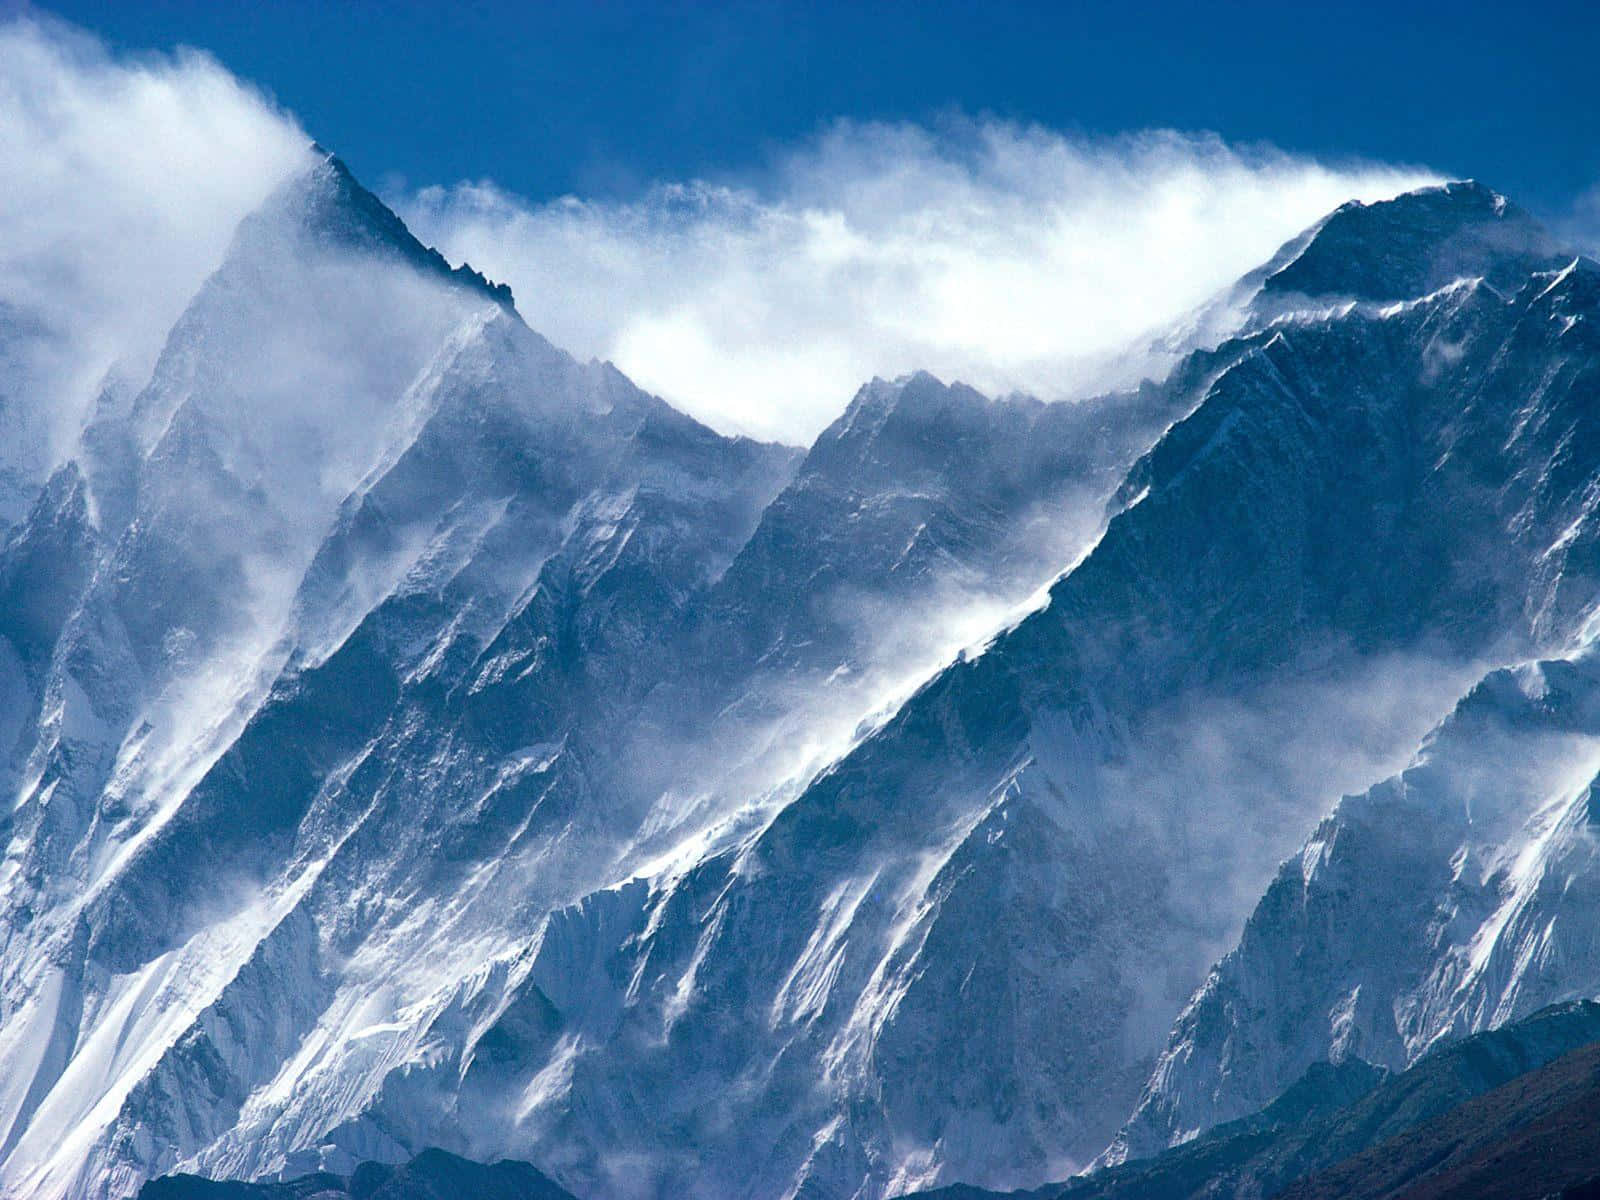 Stunning Mountain Range of the Himalayas